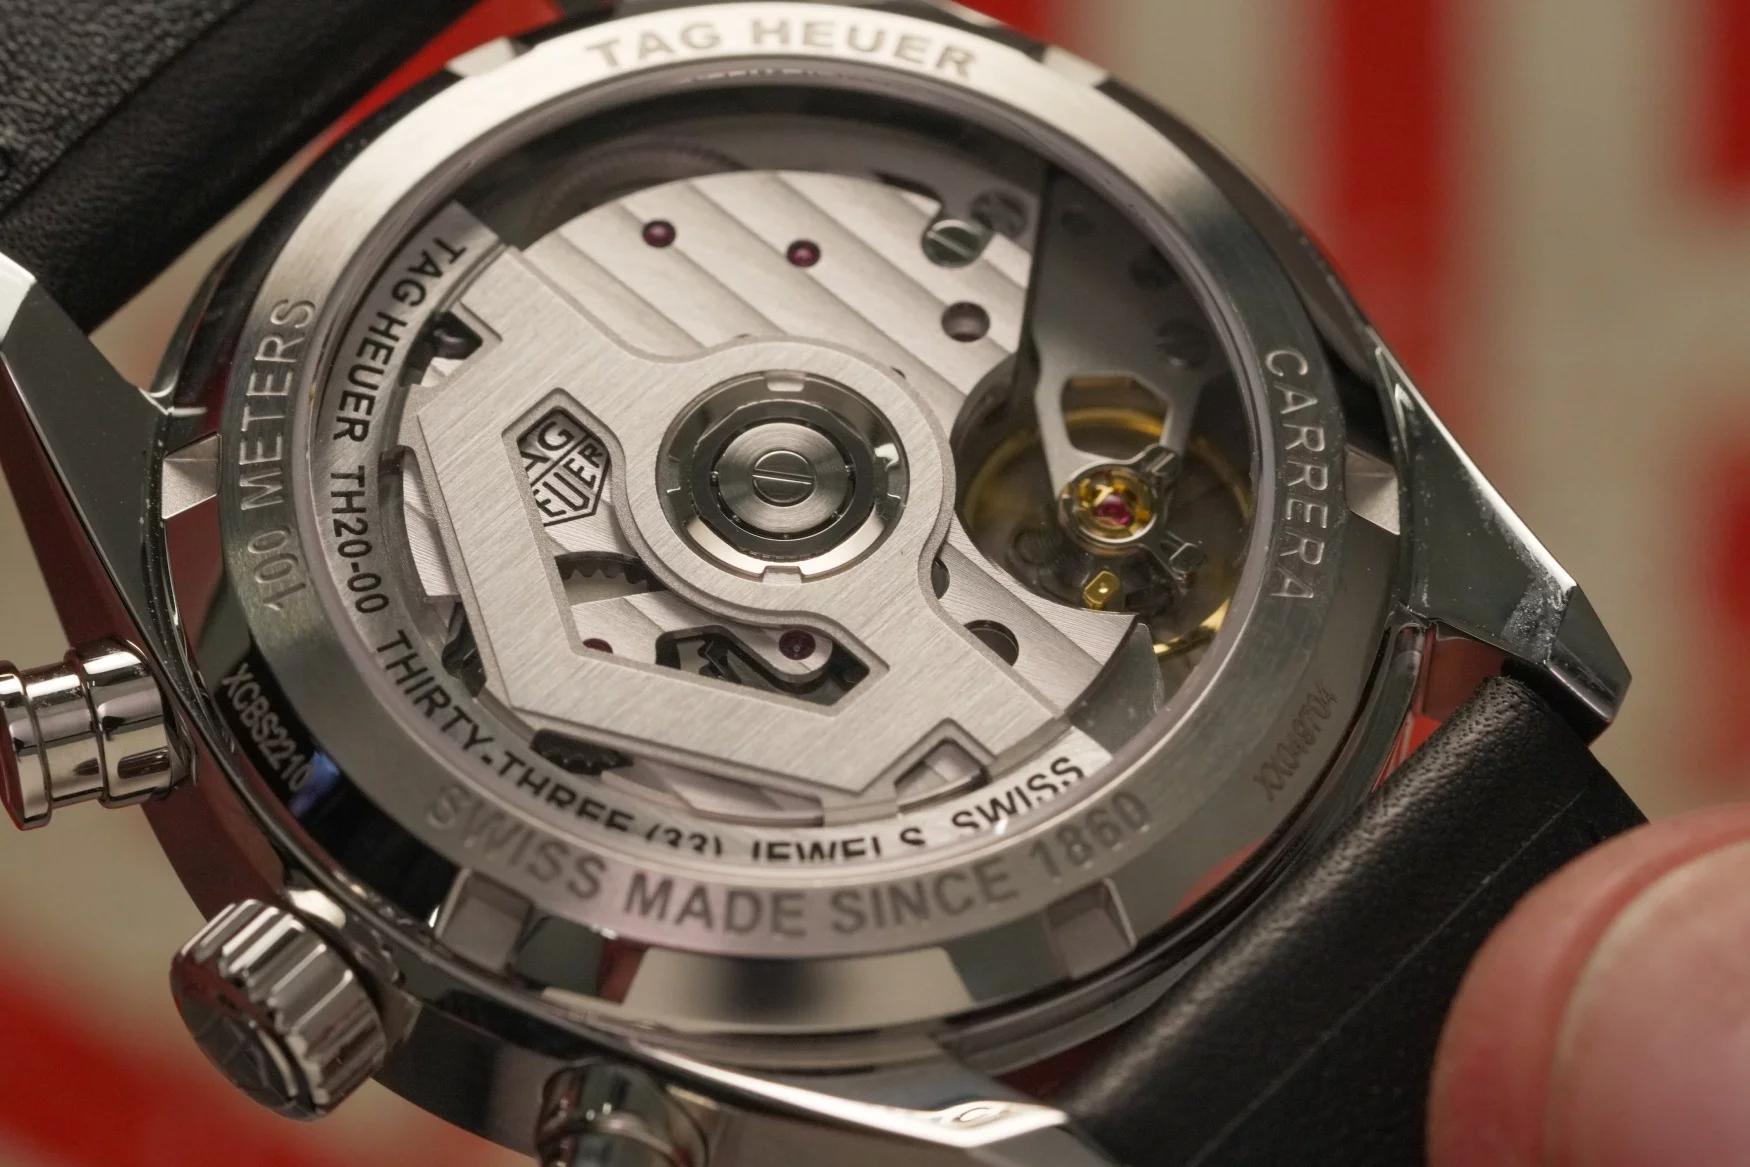 TAG Heuer's Carrera Glassbox Chronograph celebrates the 60th